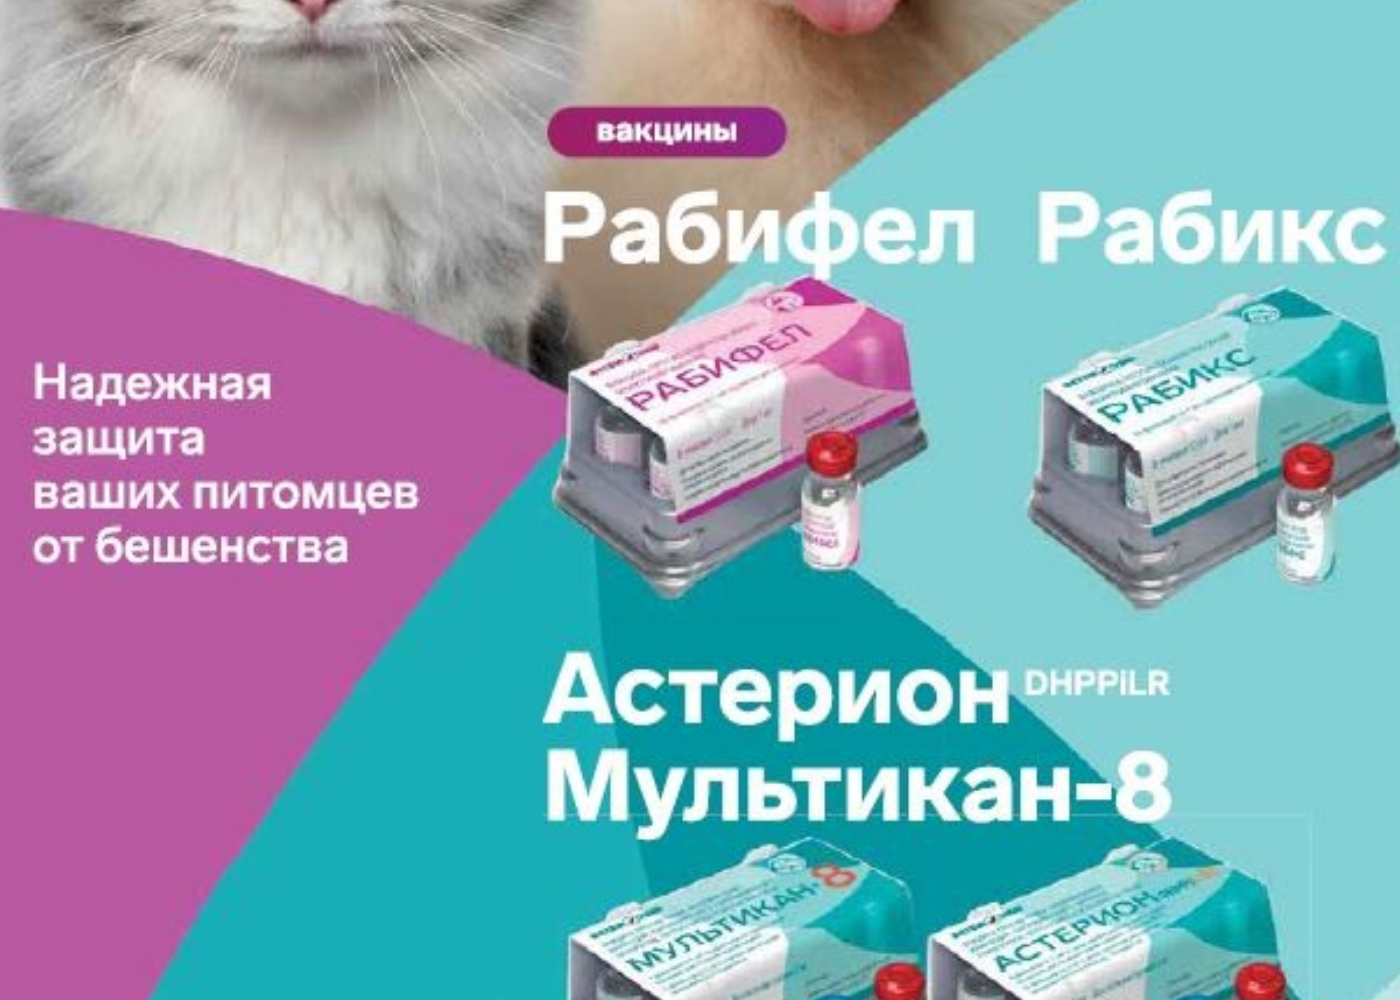 Таблетки от бешенства для котов. Вакцина рабикс против бешенства собак